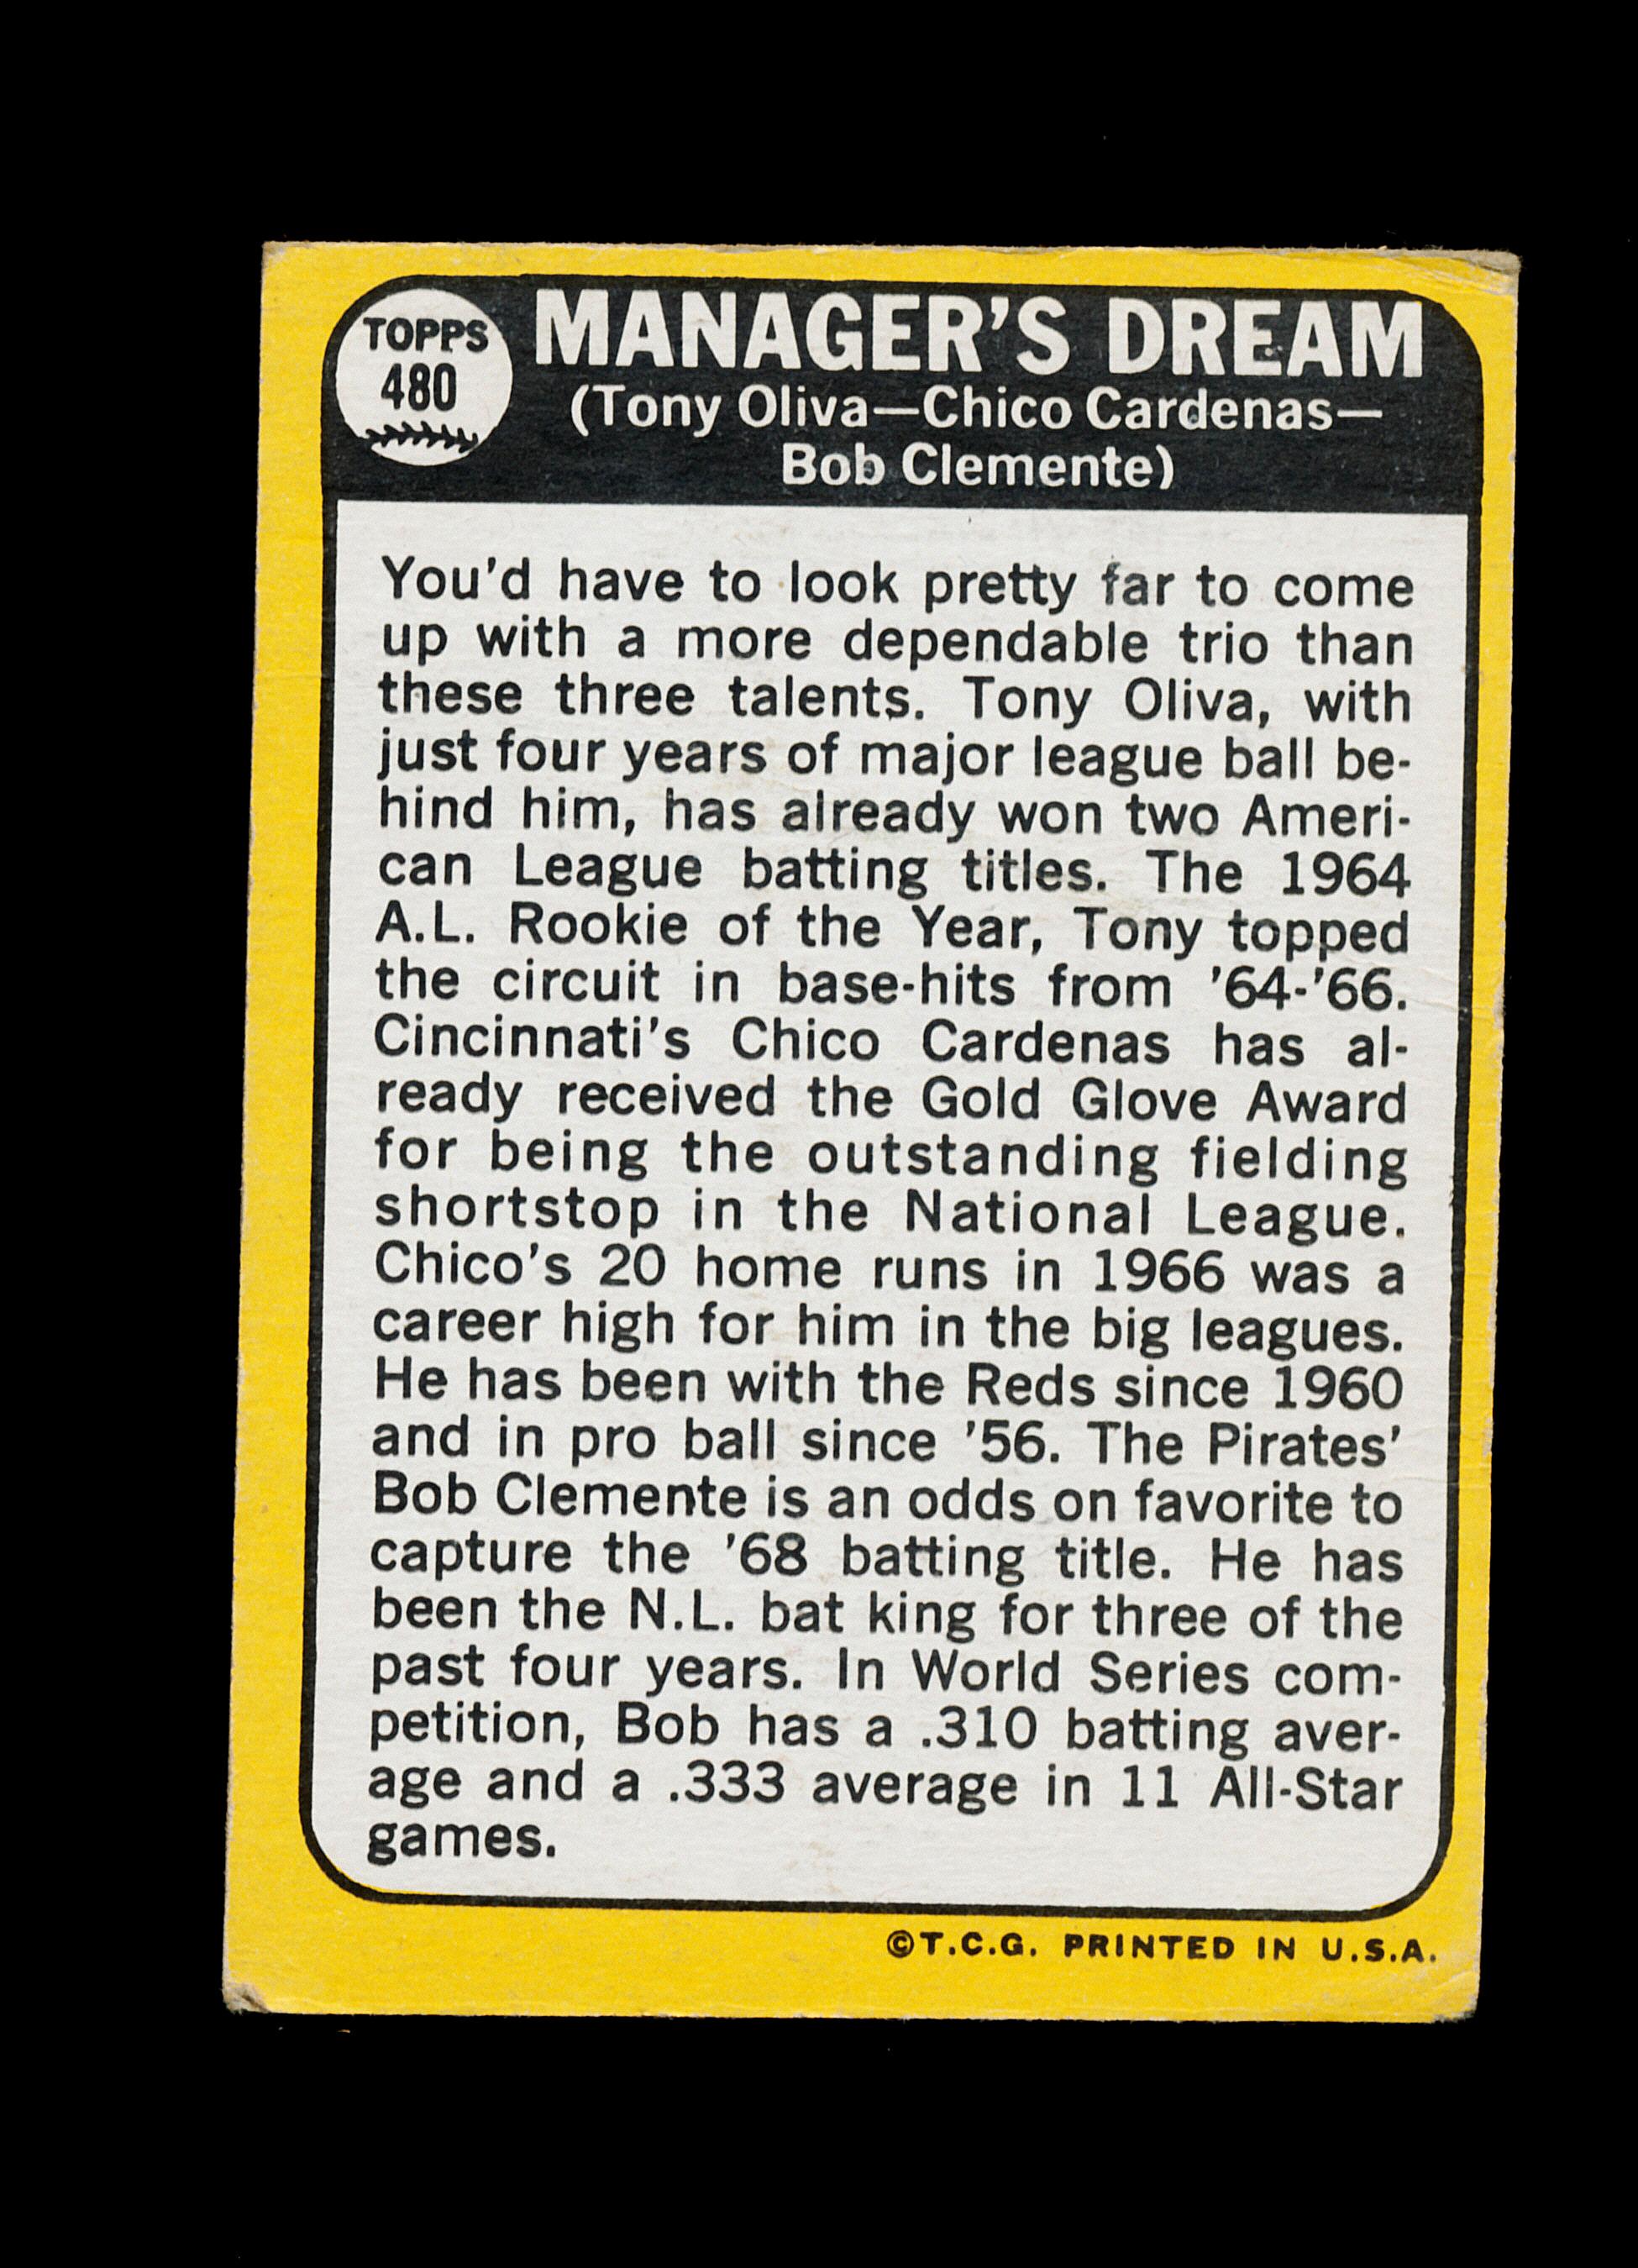 1968 Topps Baseball Card #480 "Managers Dream: Hall of Famer Bob Clemente,